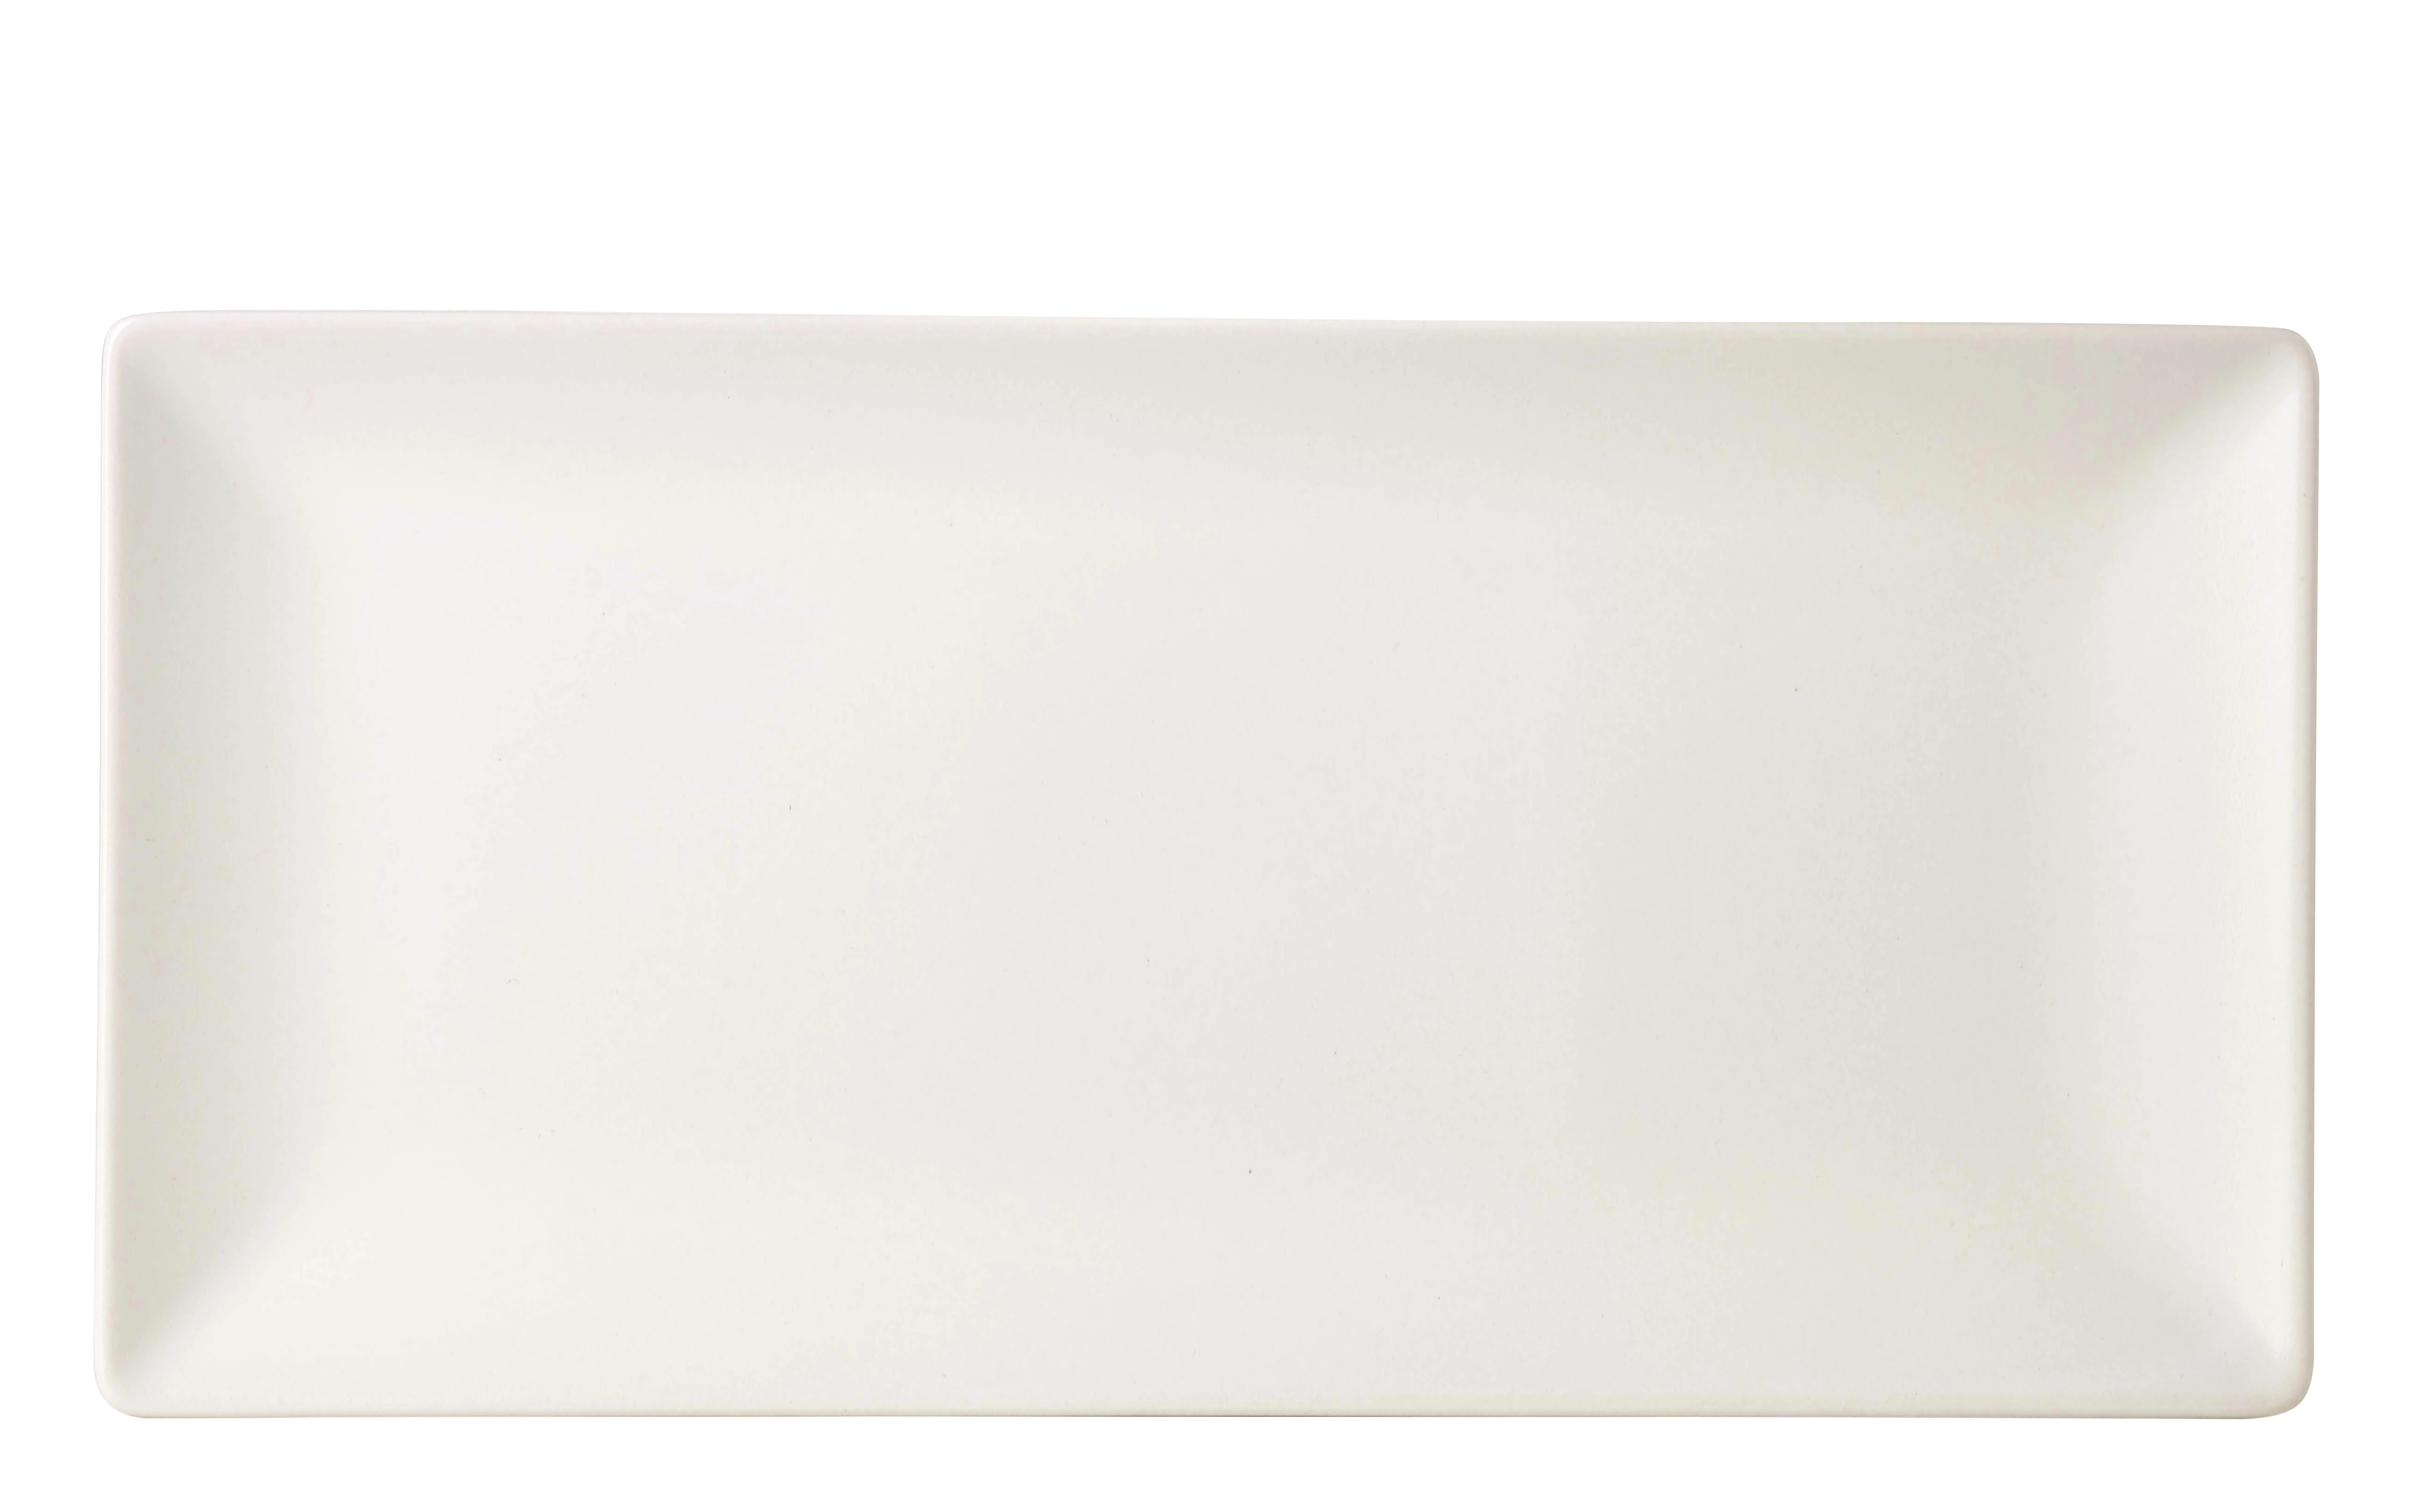 Luna Stoneware White Rectangular Plate 30 x 20cm/12 x 8"